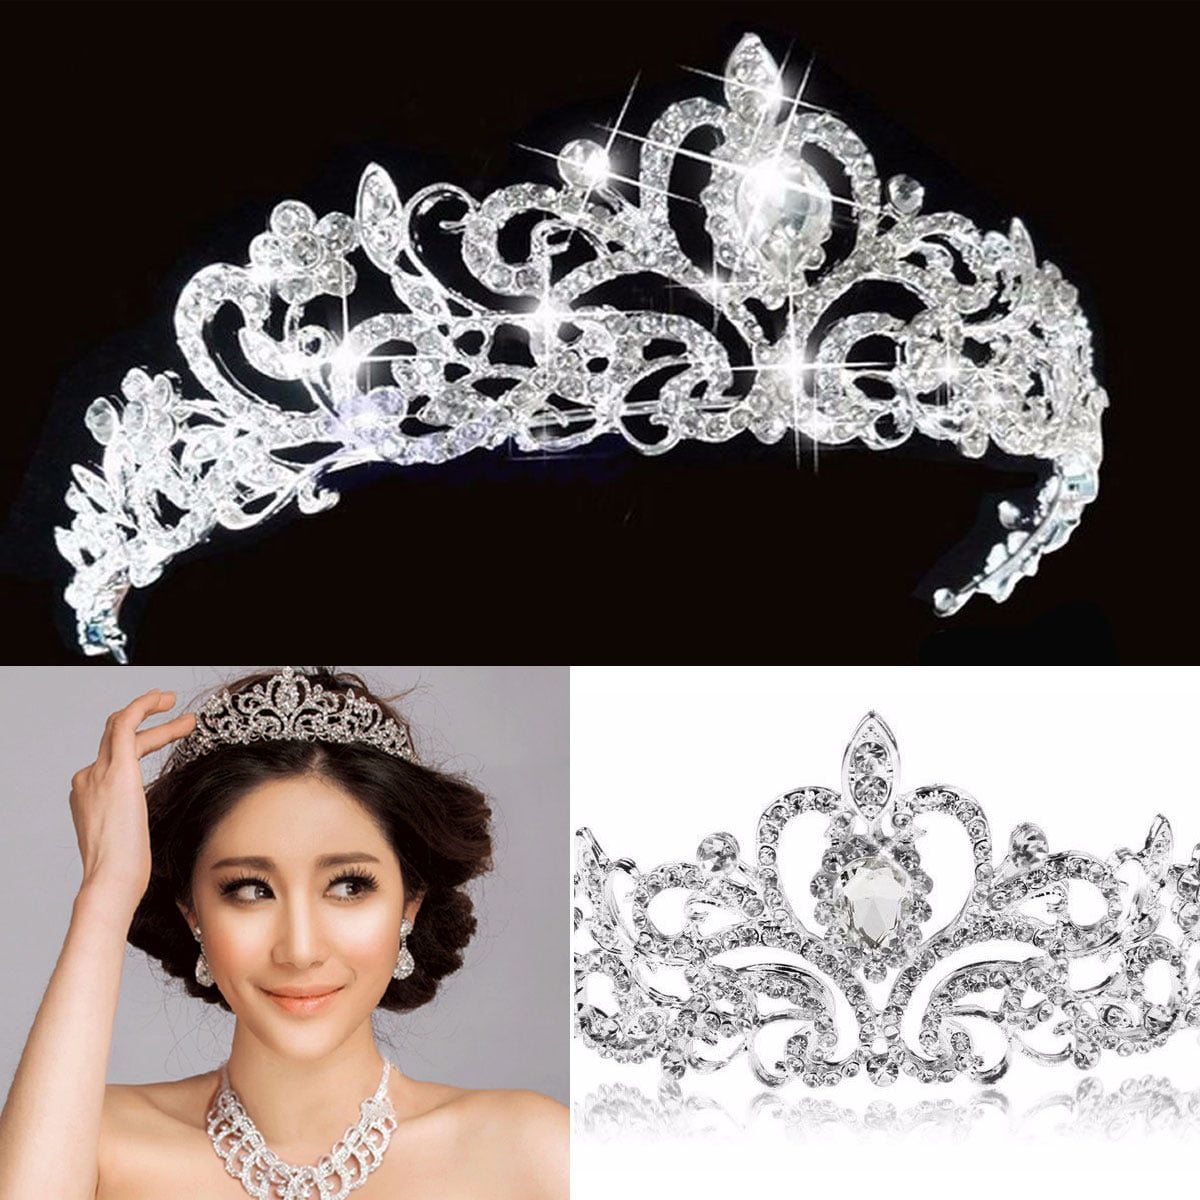 10x Wedding Bridal Princess Crystal Prom Hair Tiara Crown Veil Headband w/ Comb 